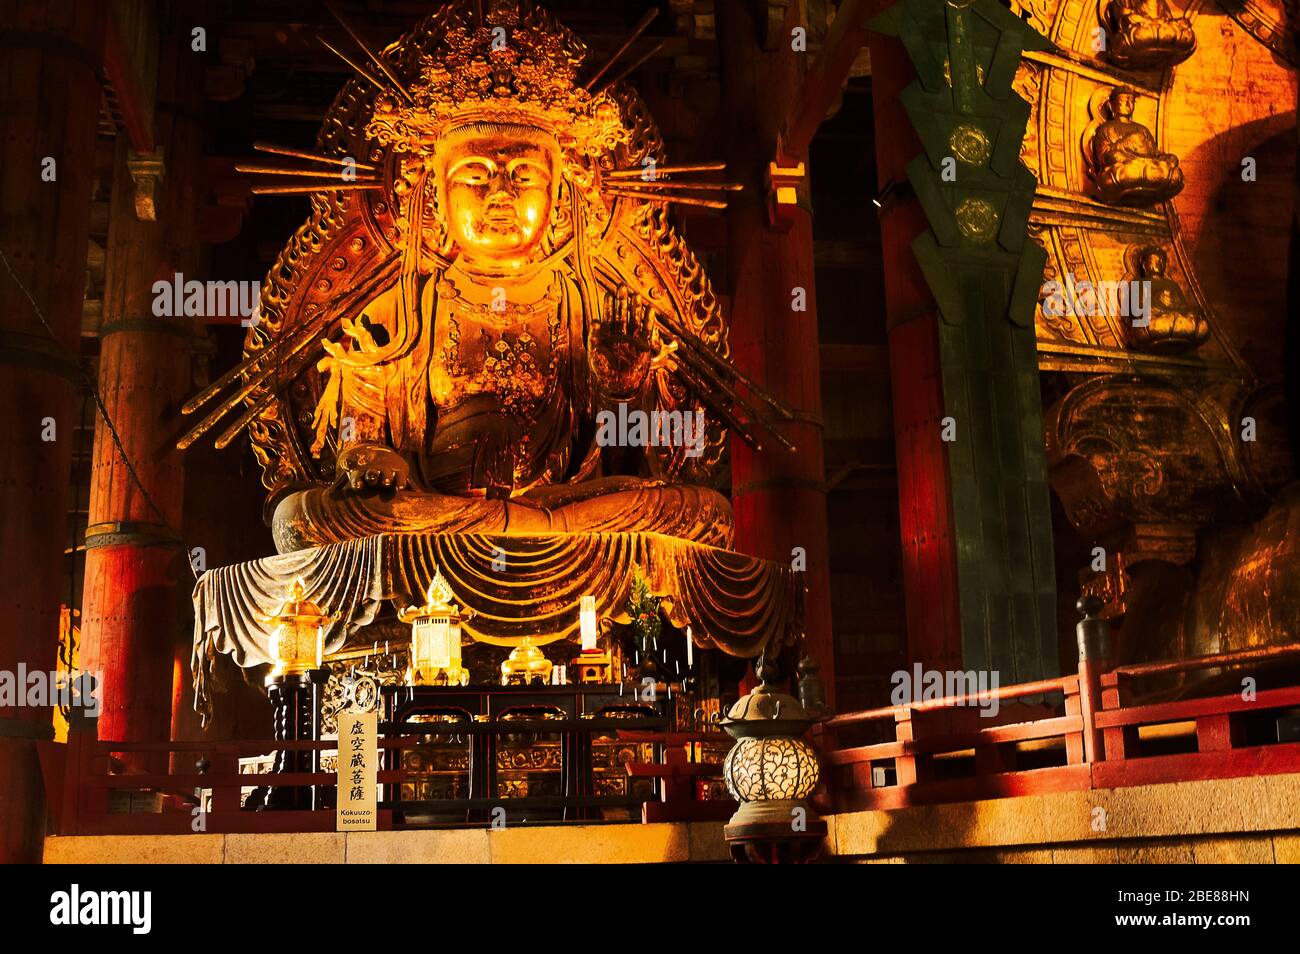 The Great Buddah in the Great Buddha Hall, Osaka, Japan Stock Photo